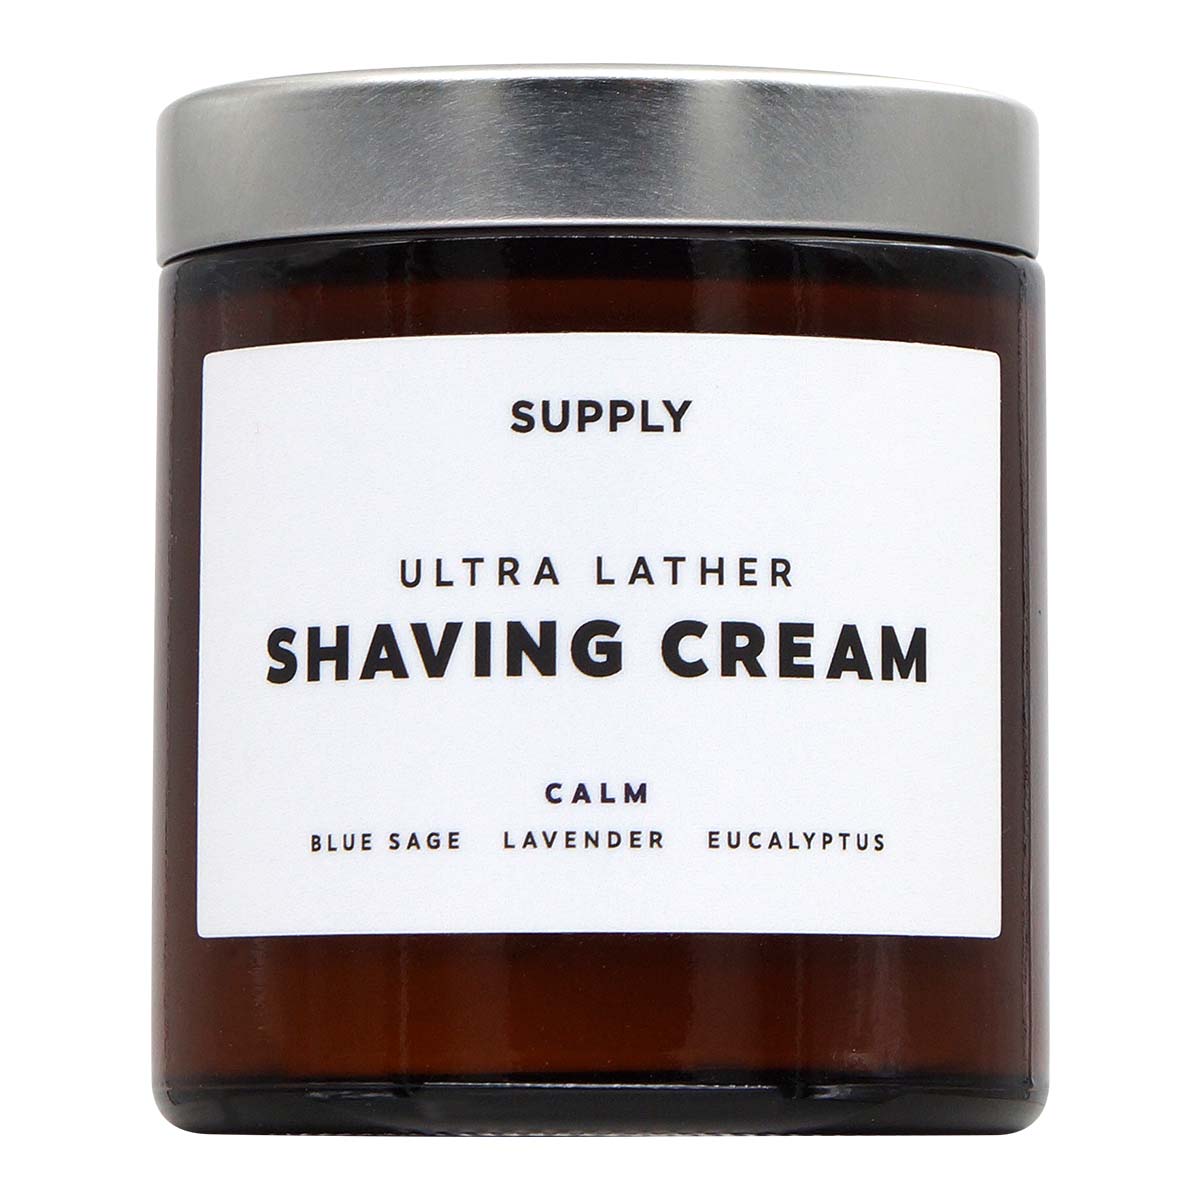 SUPPLY Ultra Lather Shaving Cream CALM 4 oz-p_2